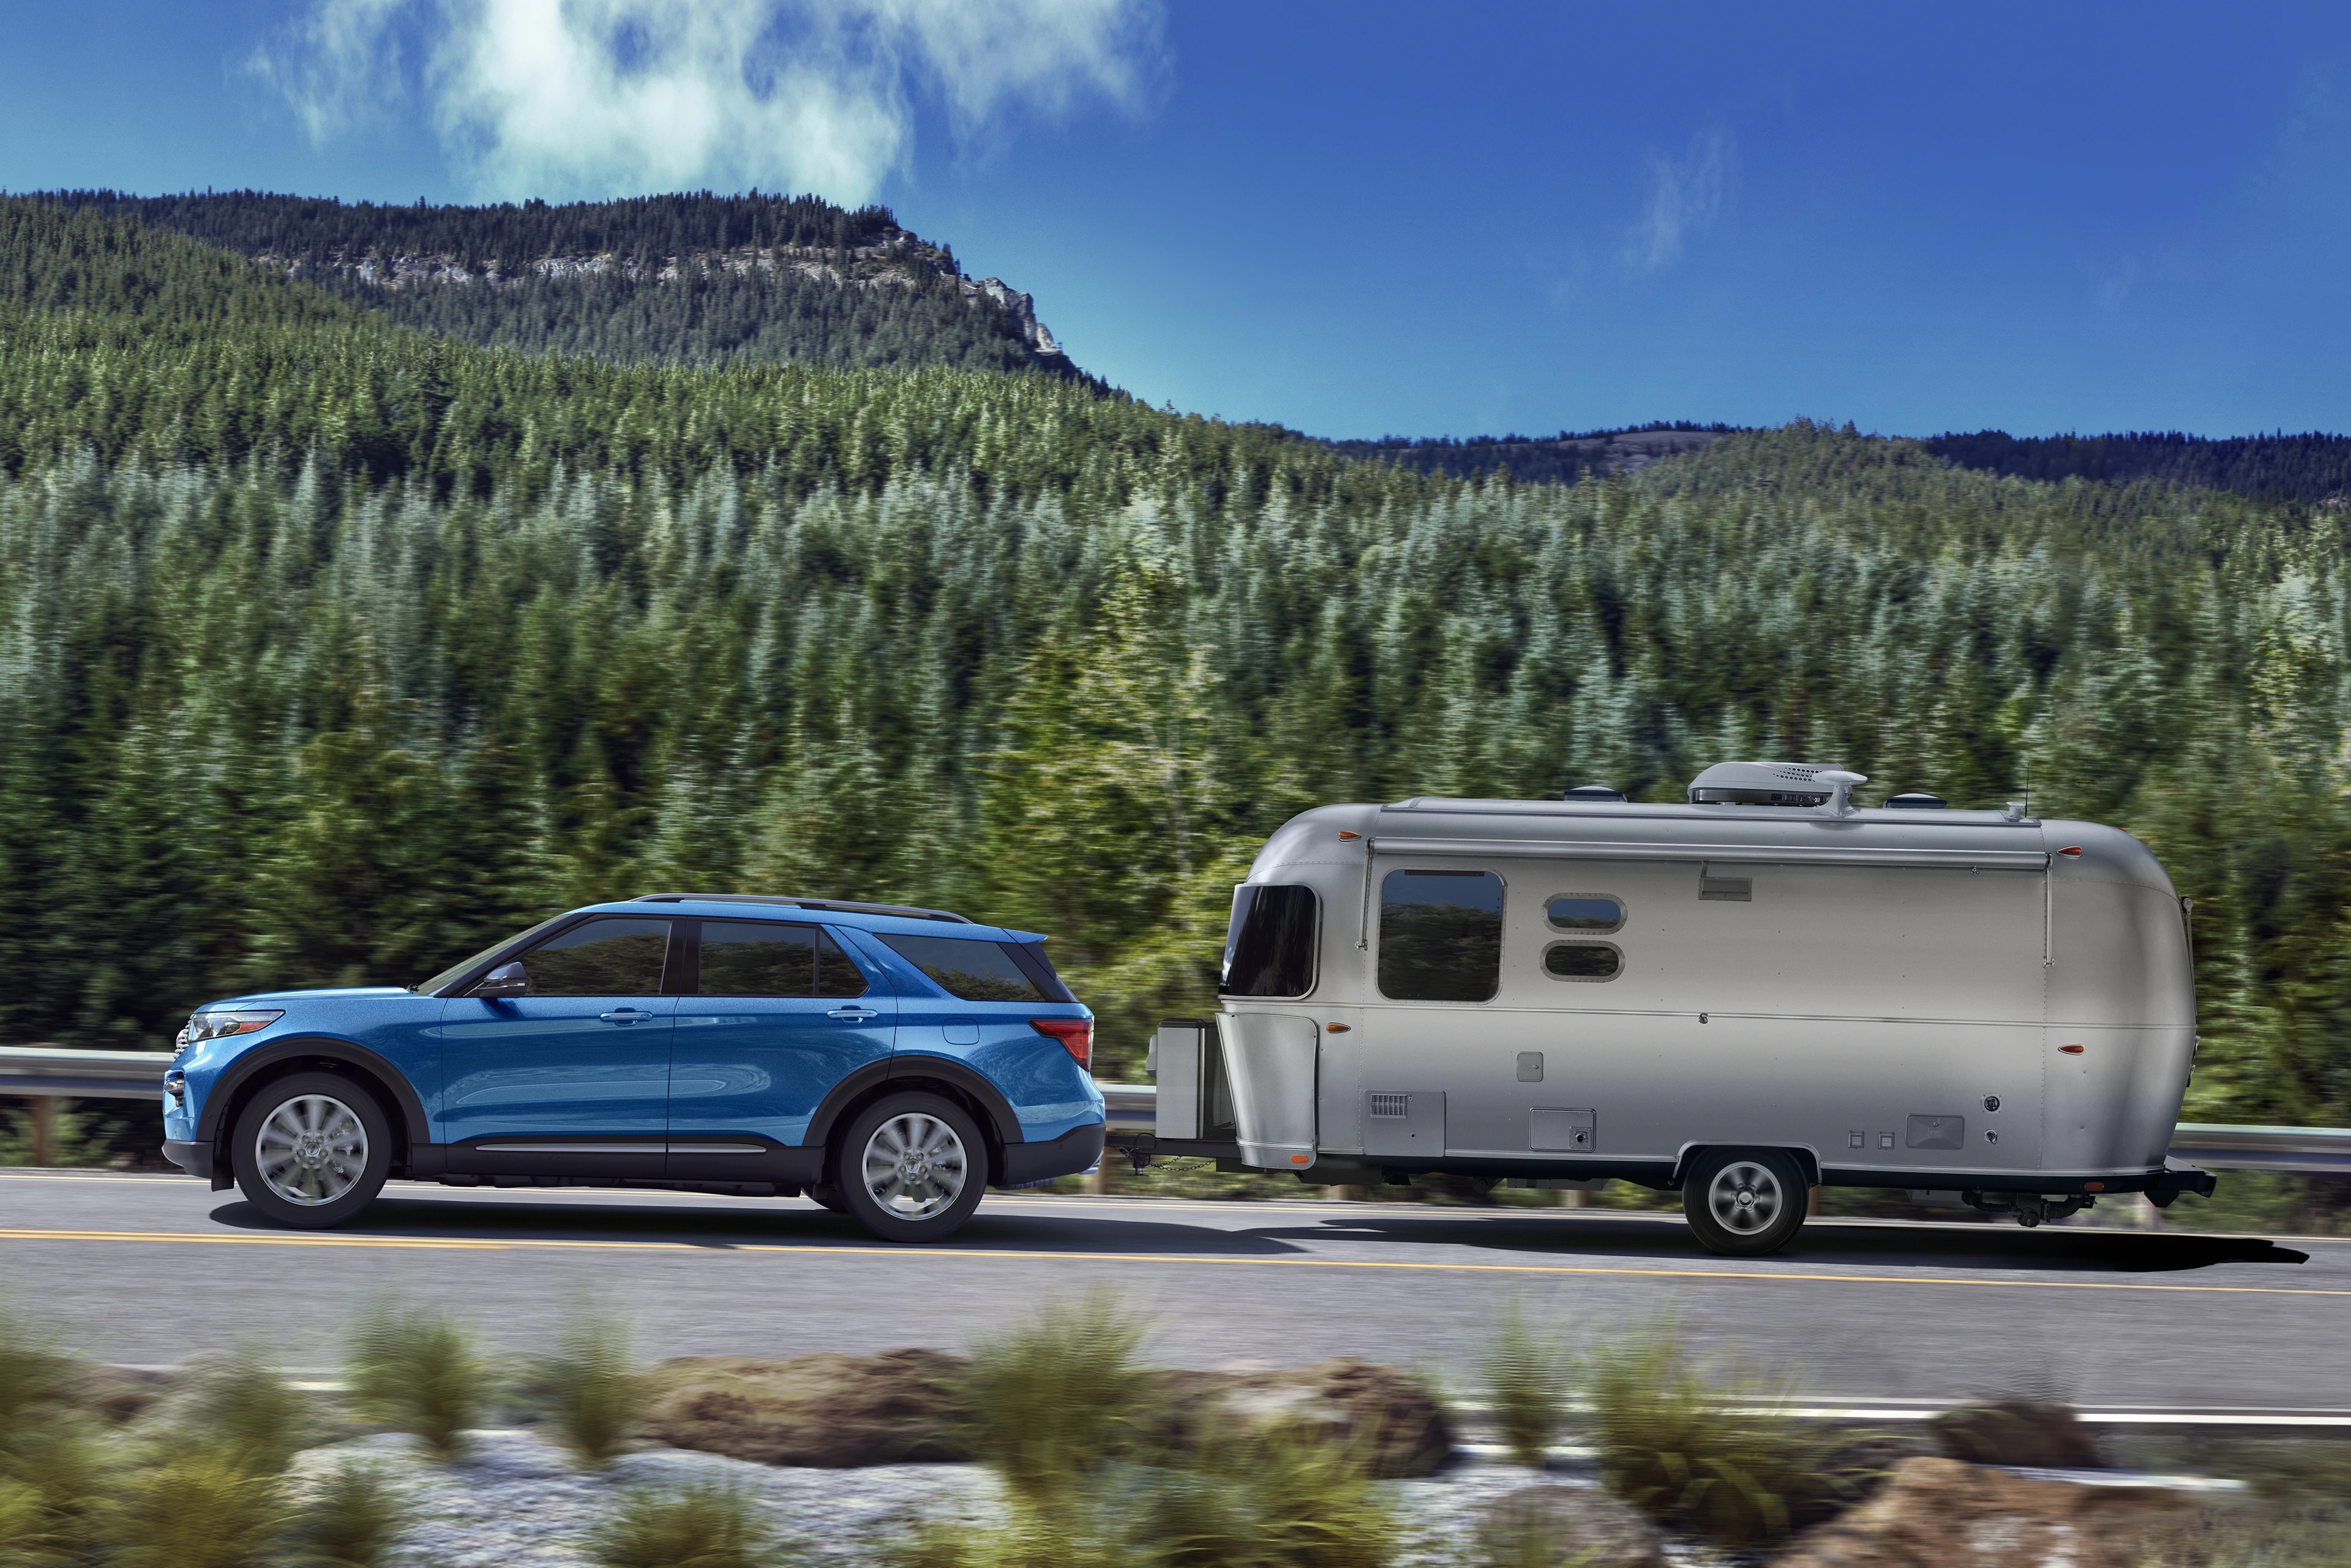 2022 Ford Explorer towing camper